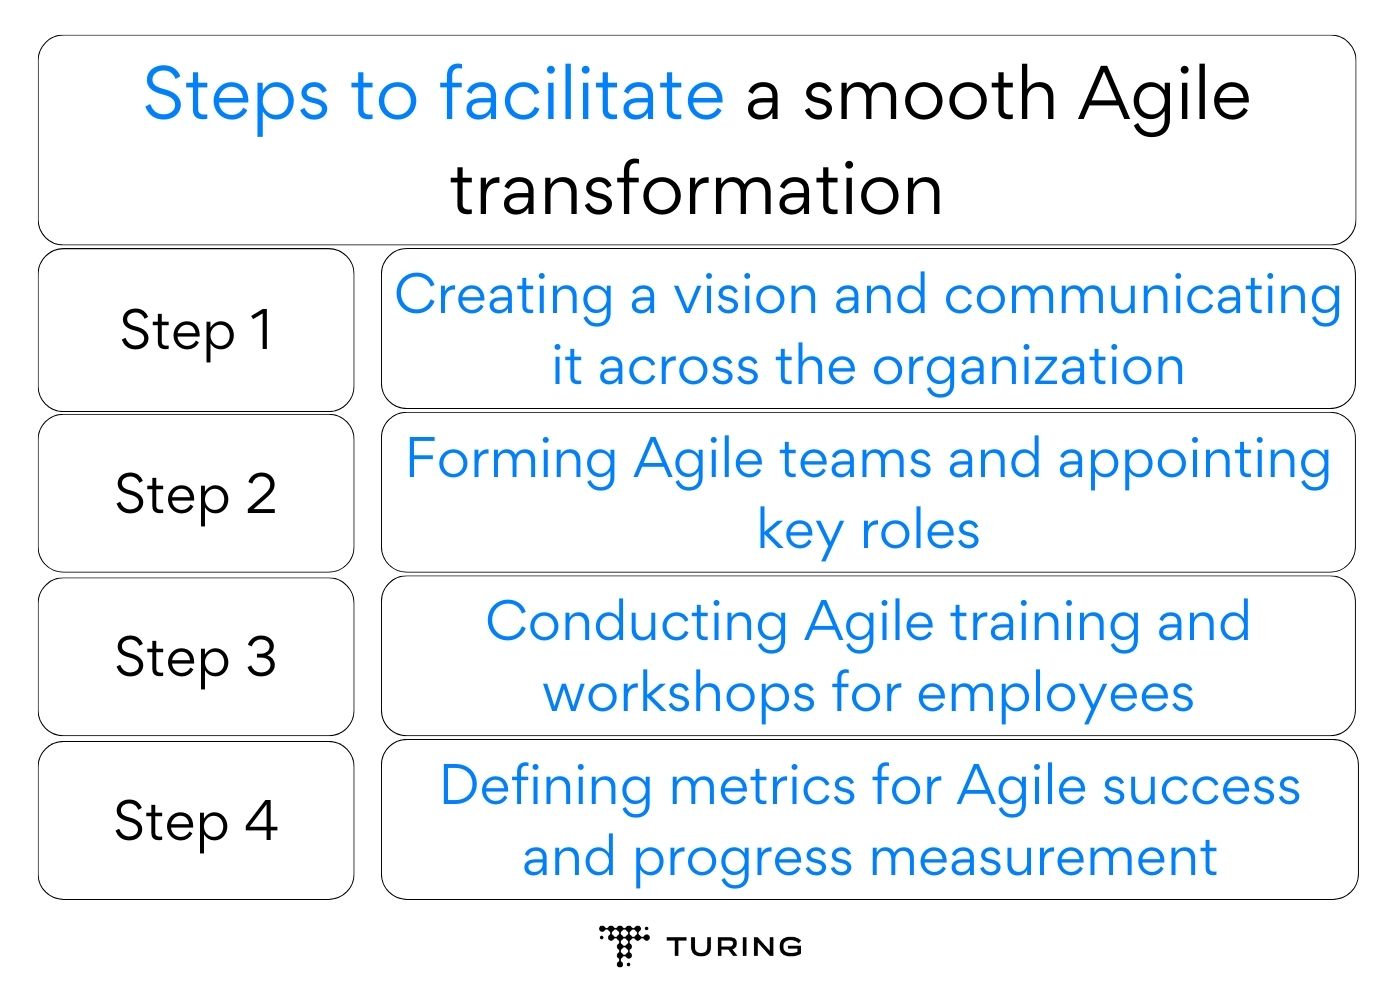 Steps to facilitate a smooth Agile transformation